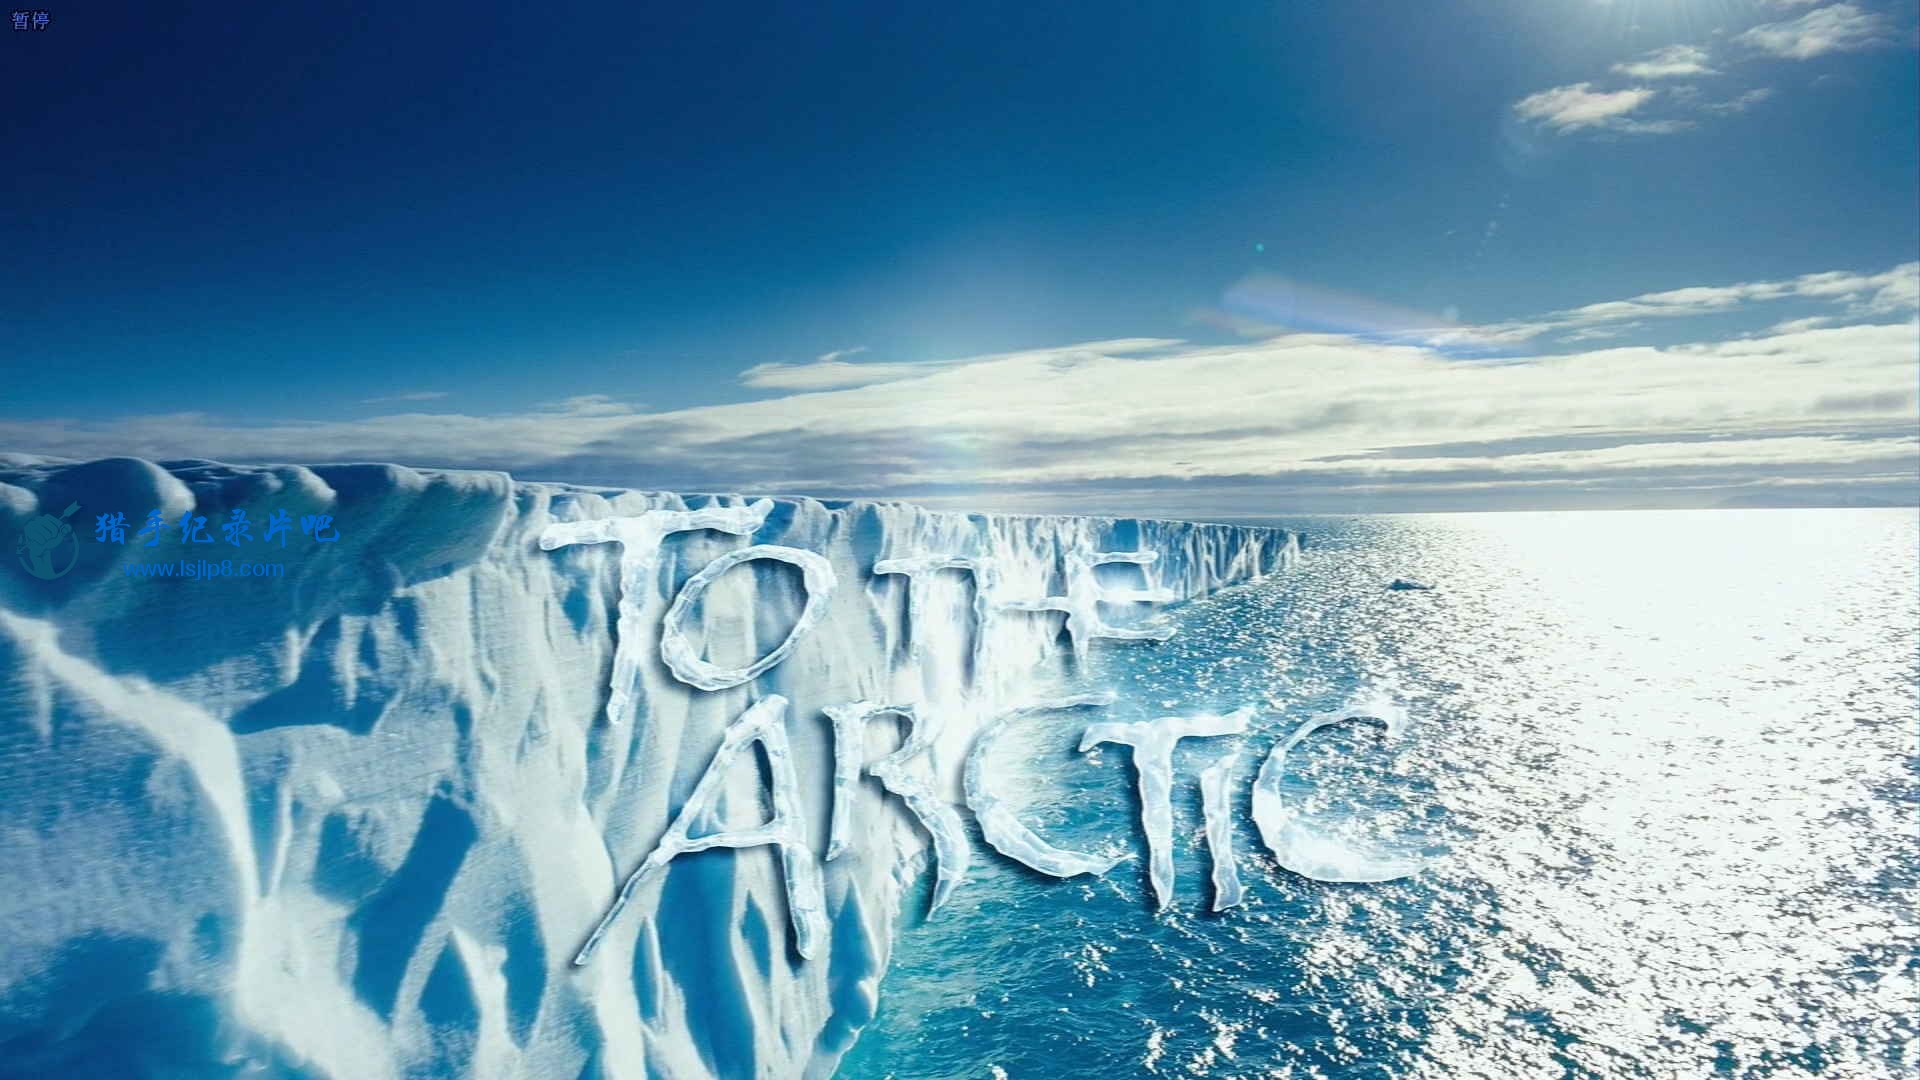 Imax.To.The.Arctic.2012.3D.1080p.Bluray.HSBS.X264.ML-zman.mkv_20200420_085514.37.jpg